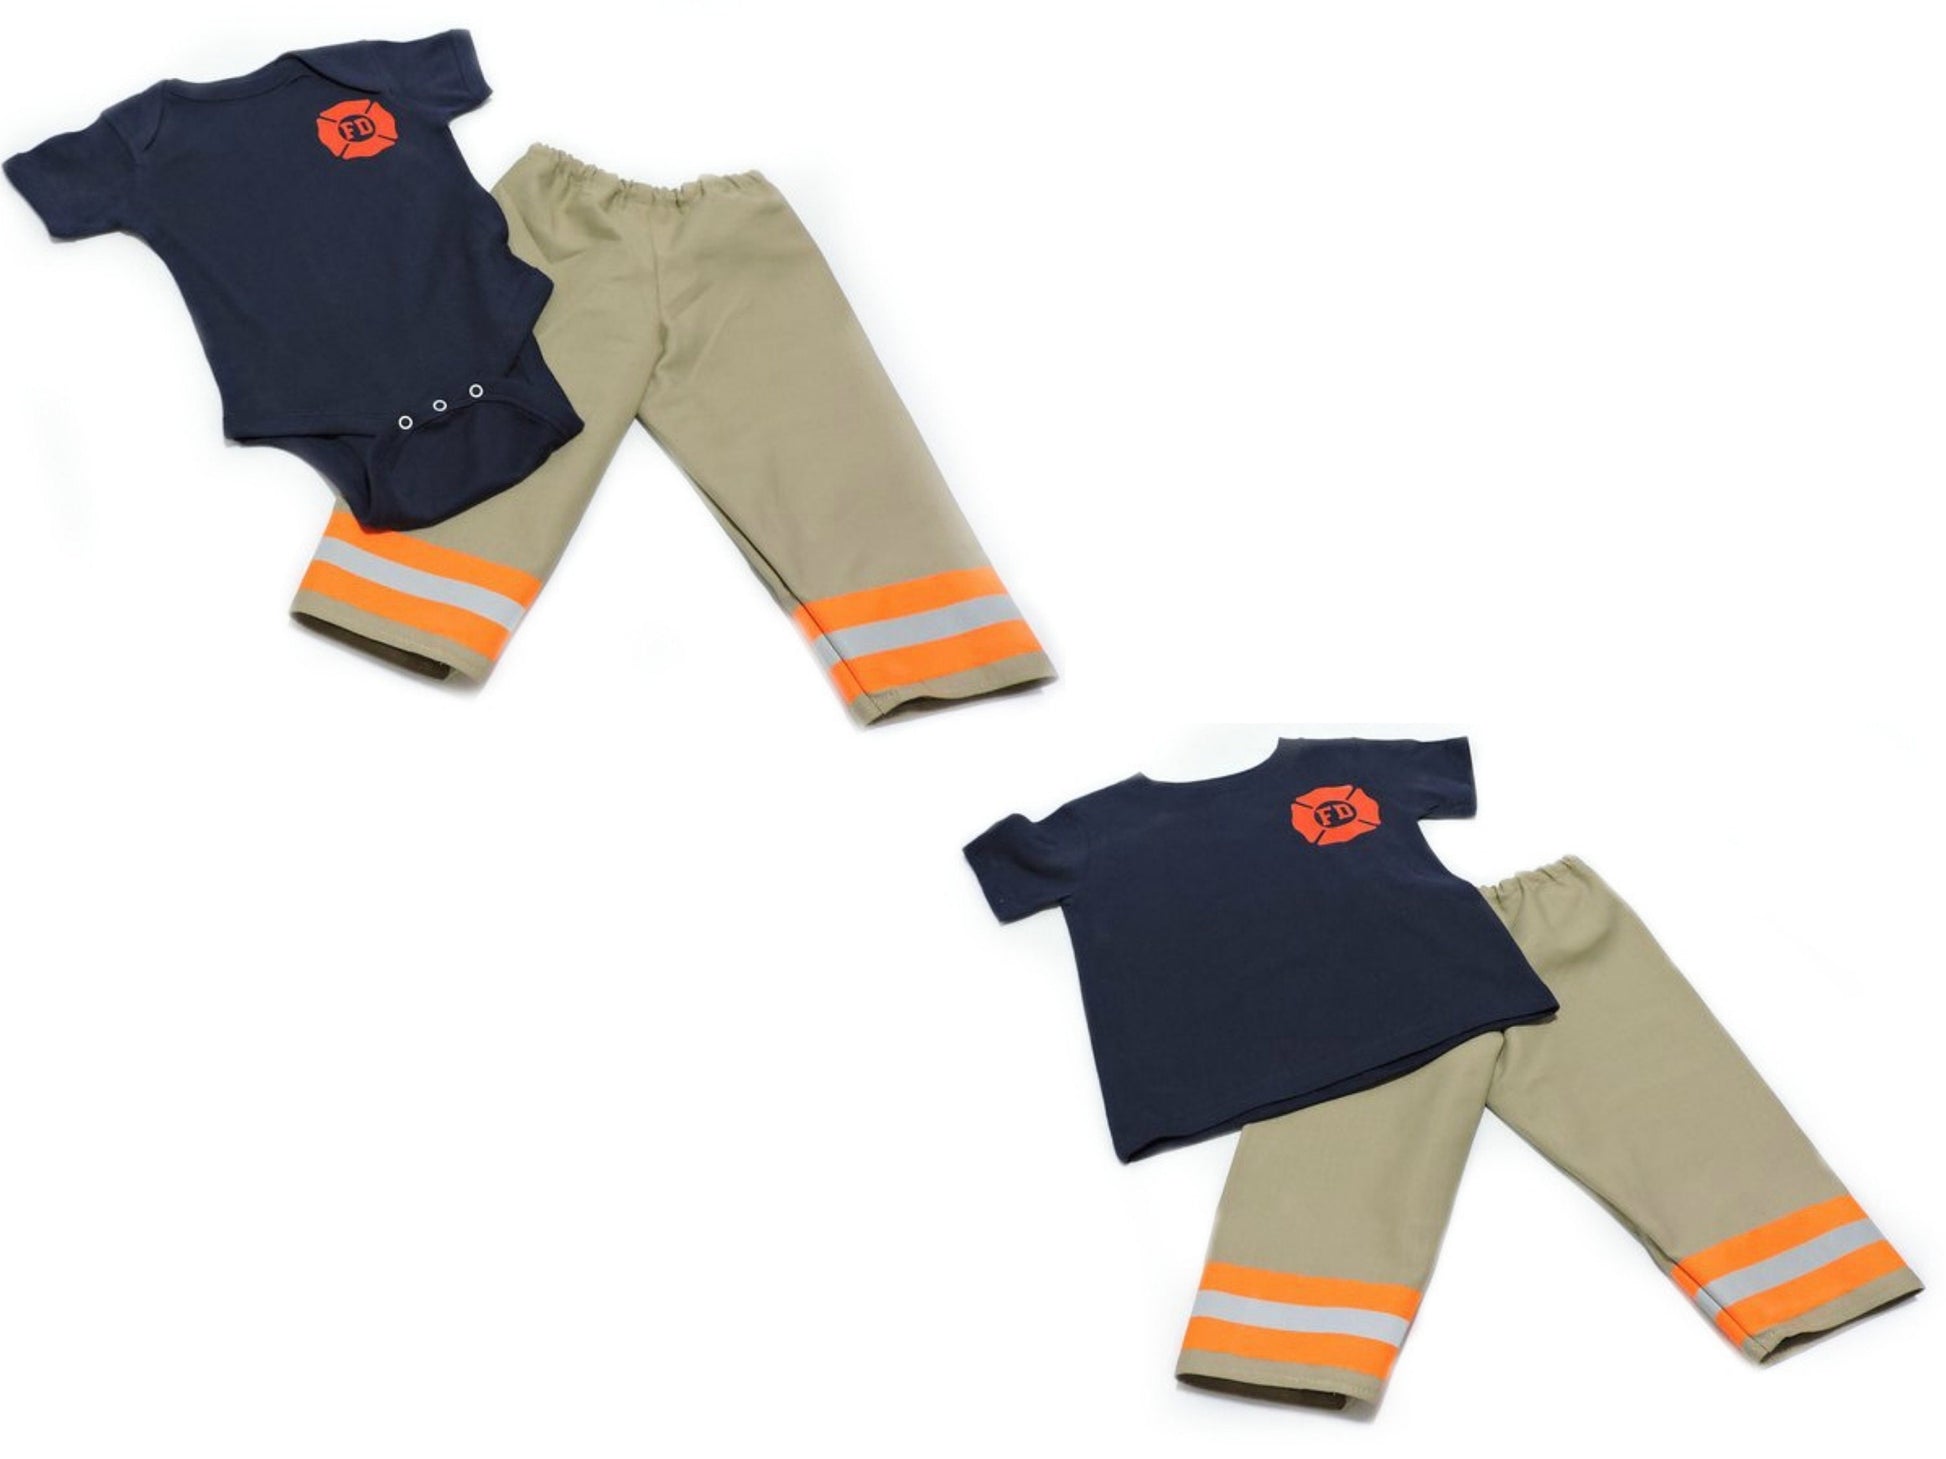 Tan fabric neon orange reflective tape Baby Boy Firefighter Costume